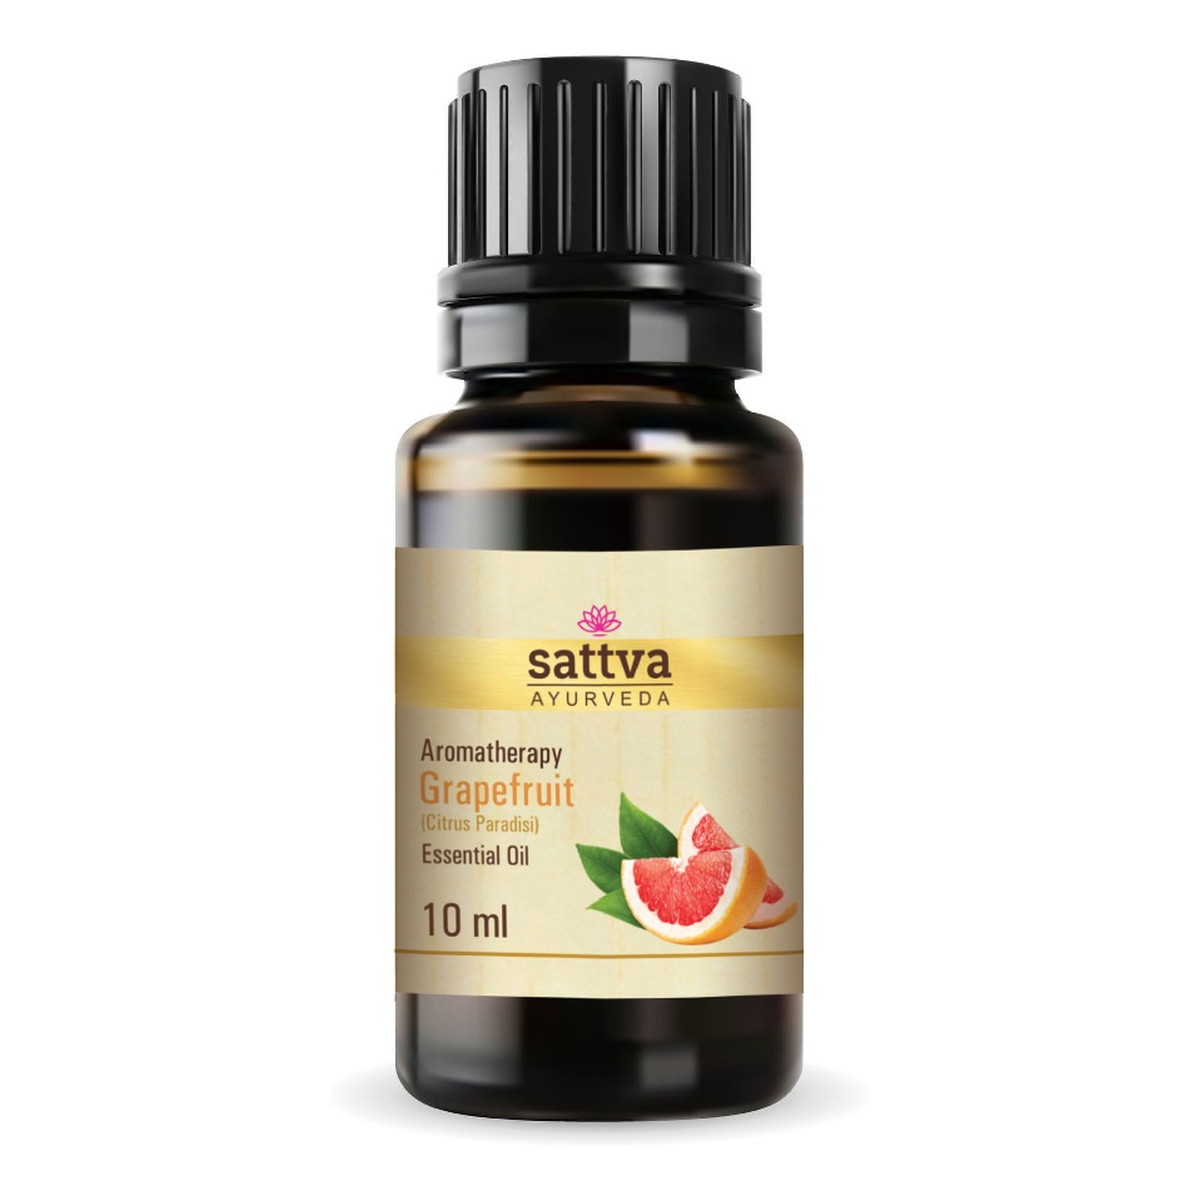 Sattva Aromatherapy Essential Oil Olejek eteryczny grapefruit 10ml